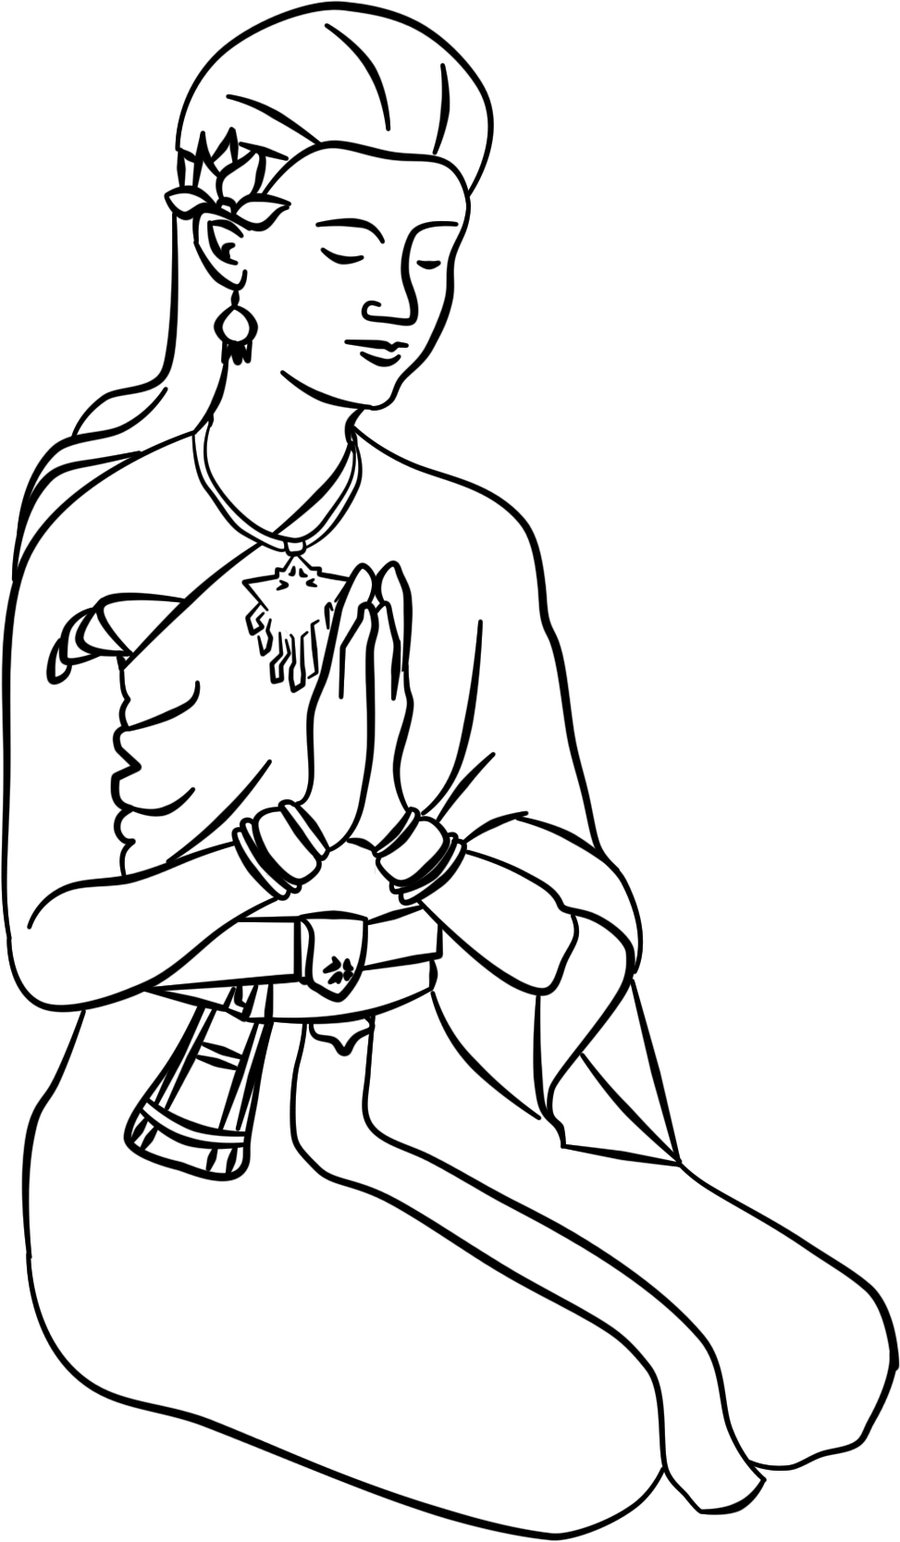 Coloring page: Hindu Mythology: Buddha (Gods and Goddesses) #89615 - Free Printable Coloring Pages